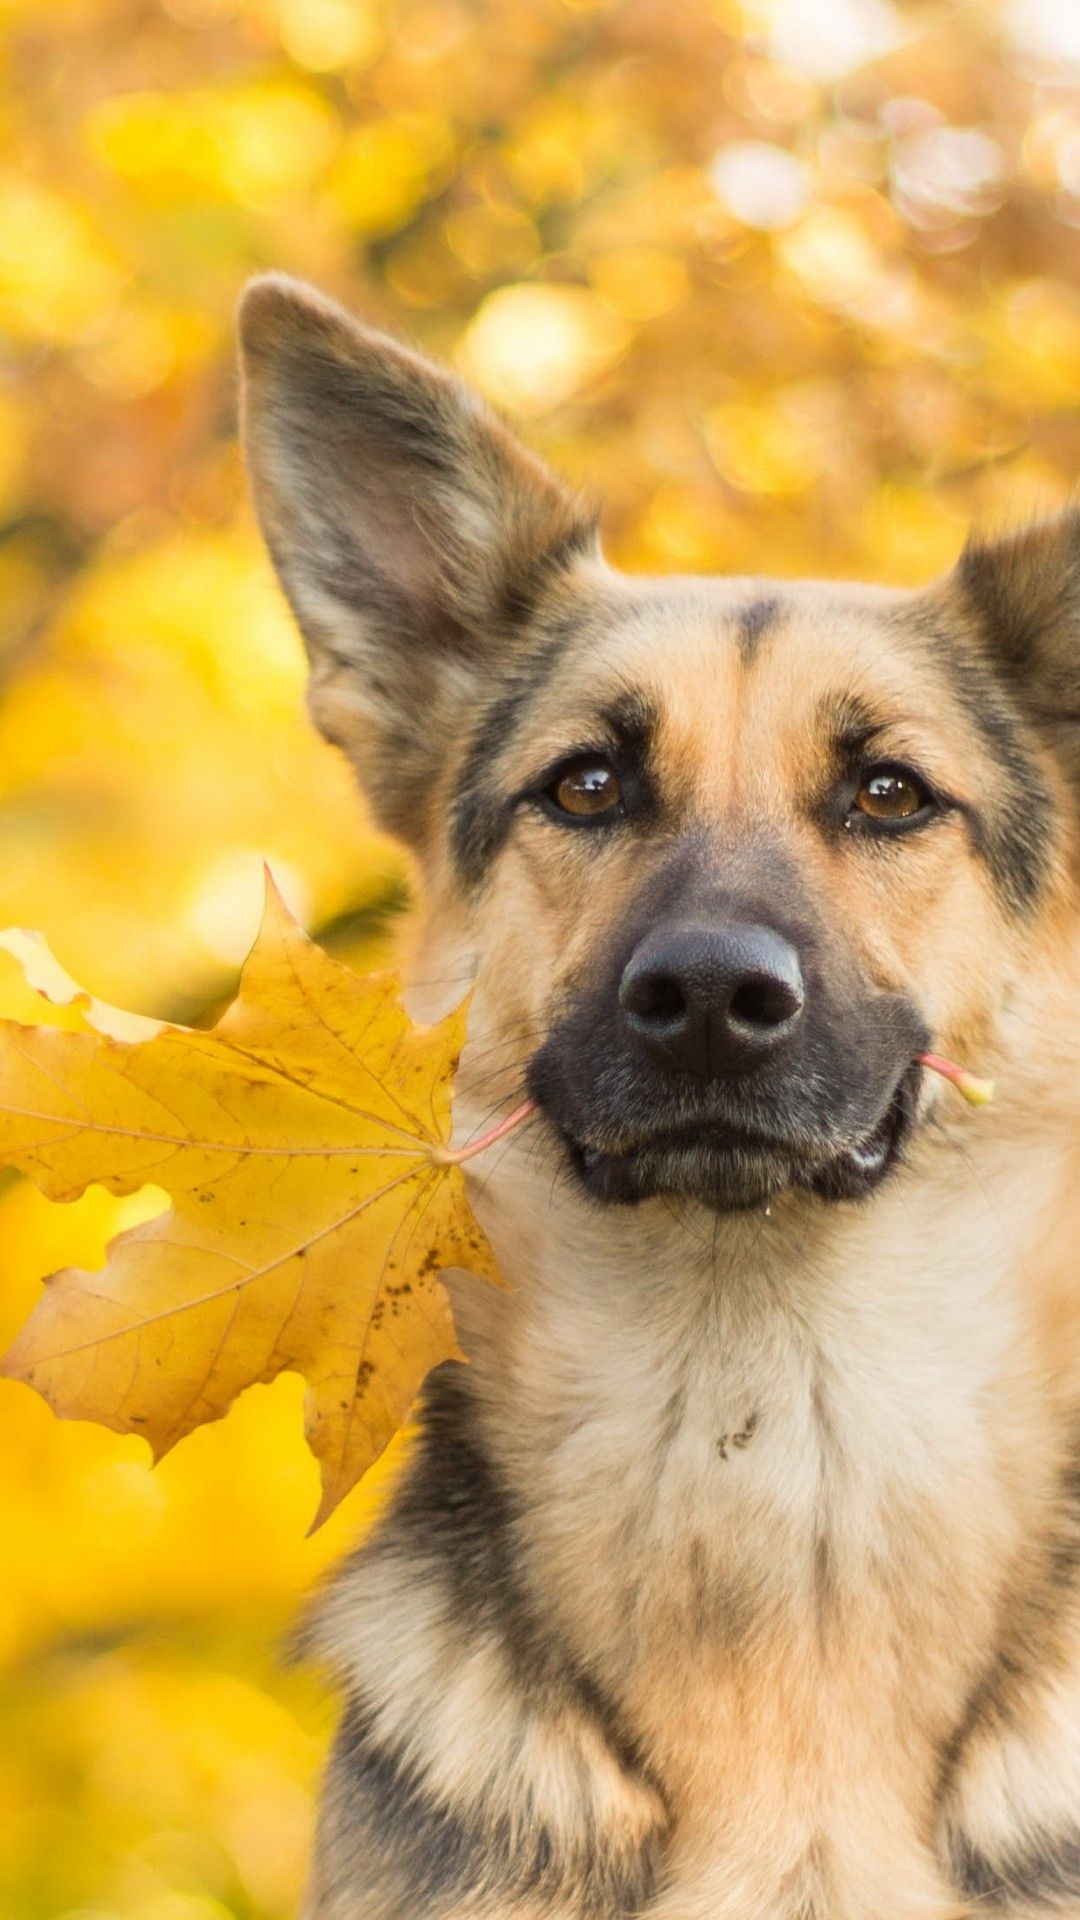 Wallpaper dog, cute animals, leaves, autumn, 4k, Animals